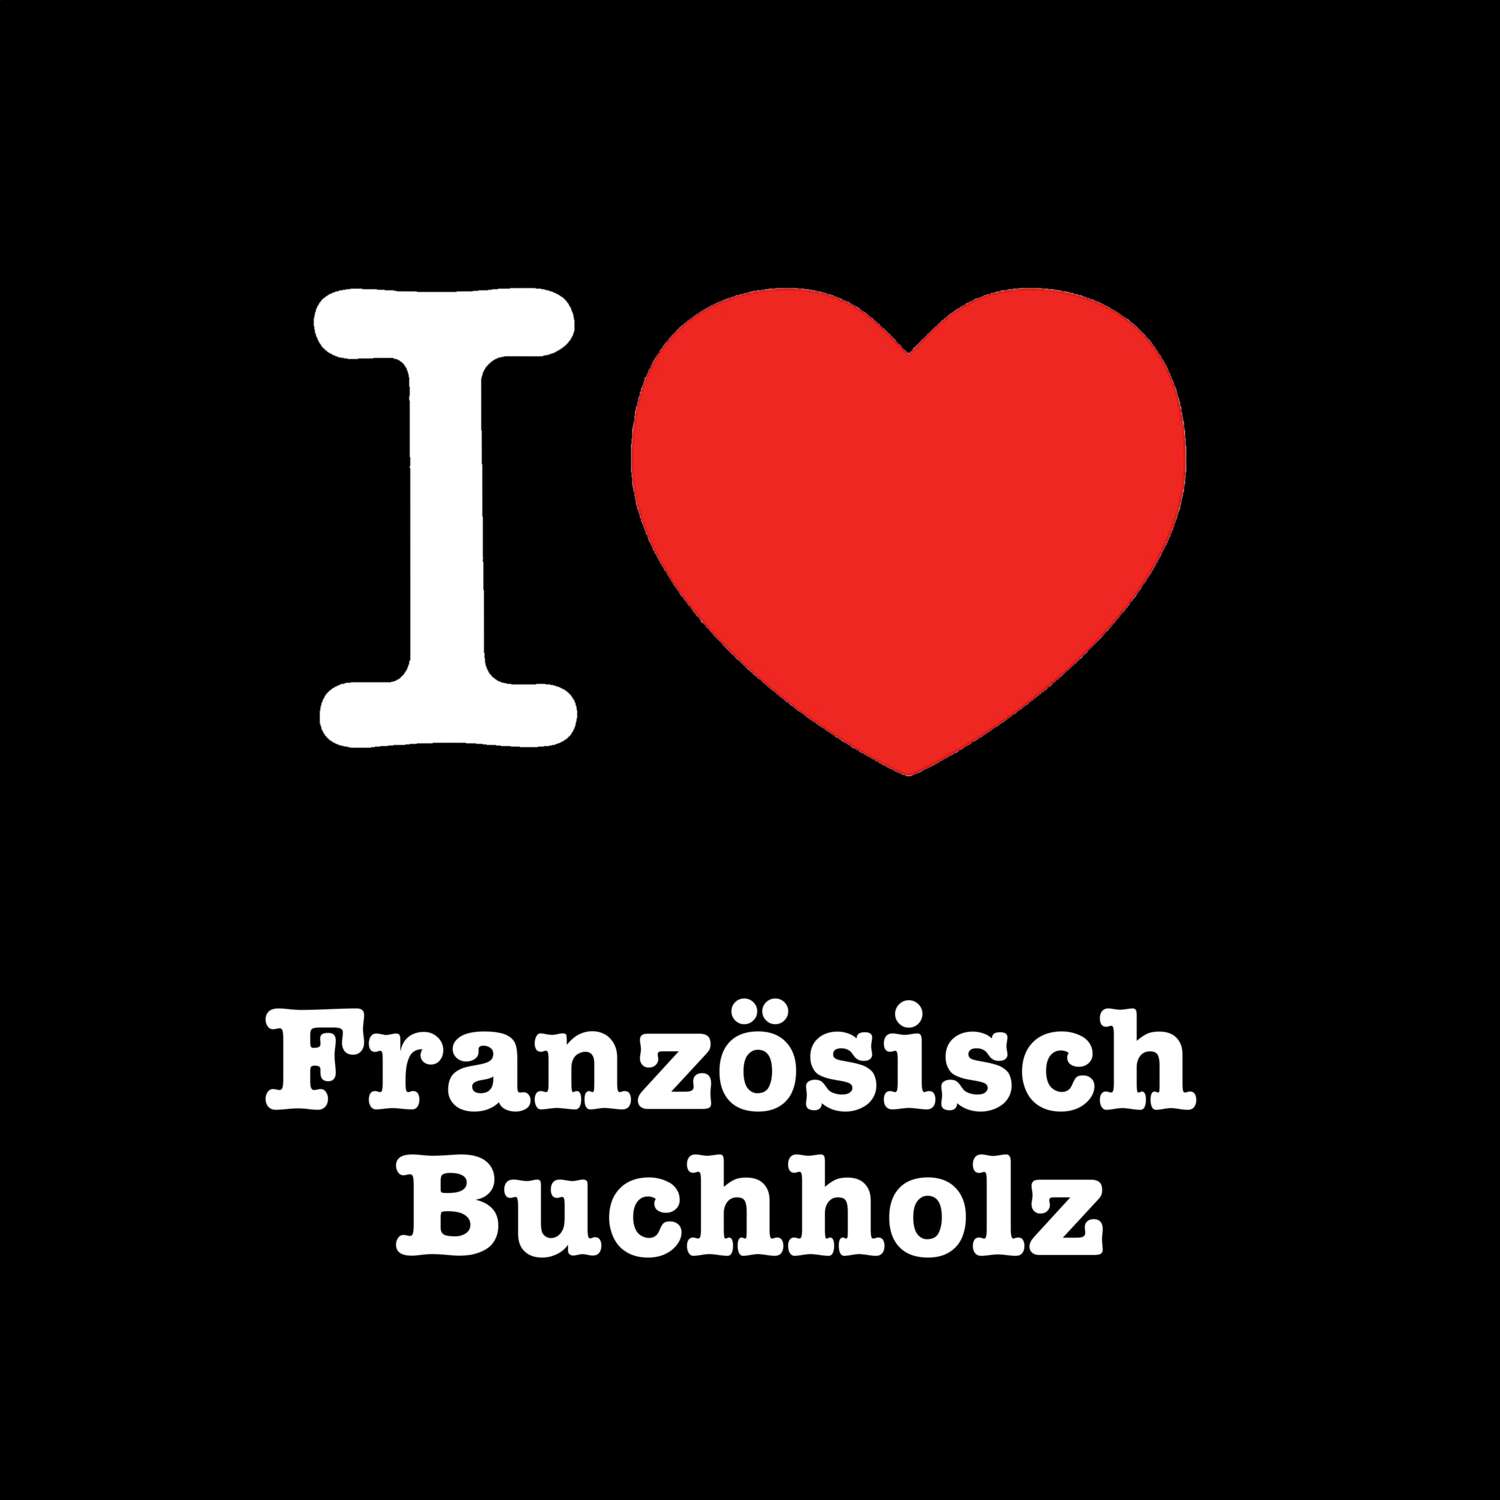 Französisch Buchholz T-Shirt »I love«